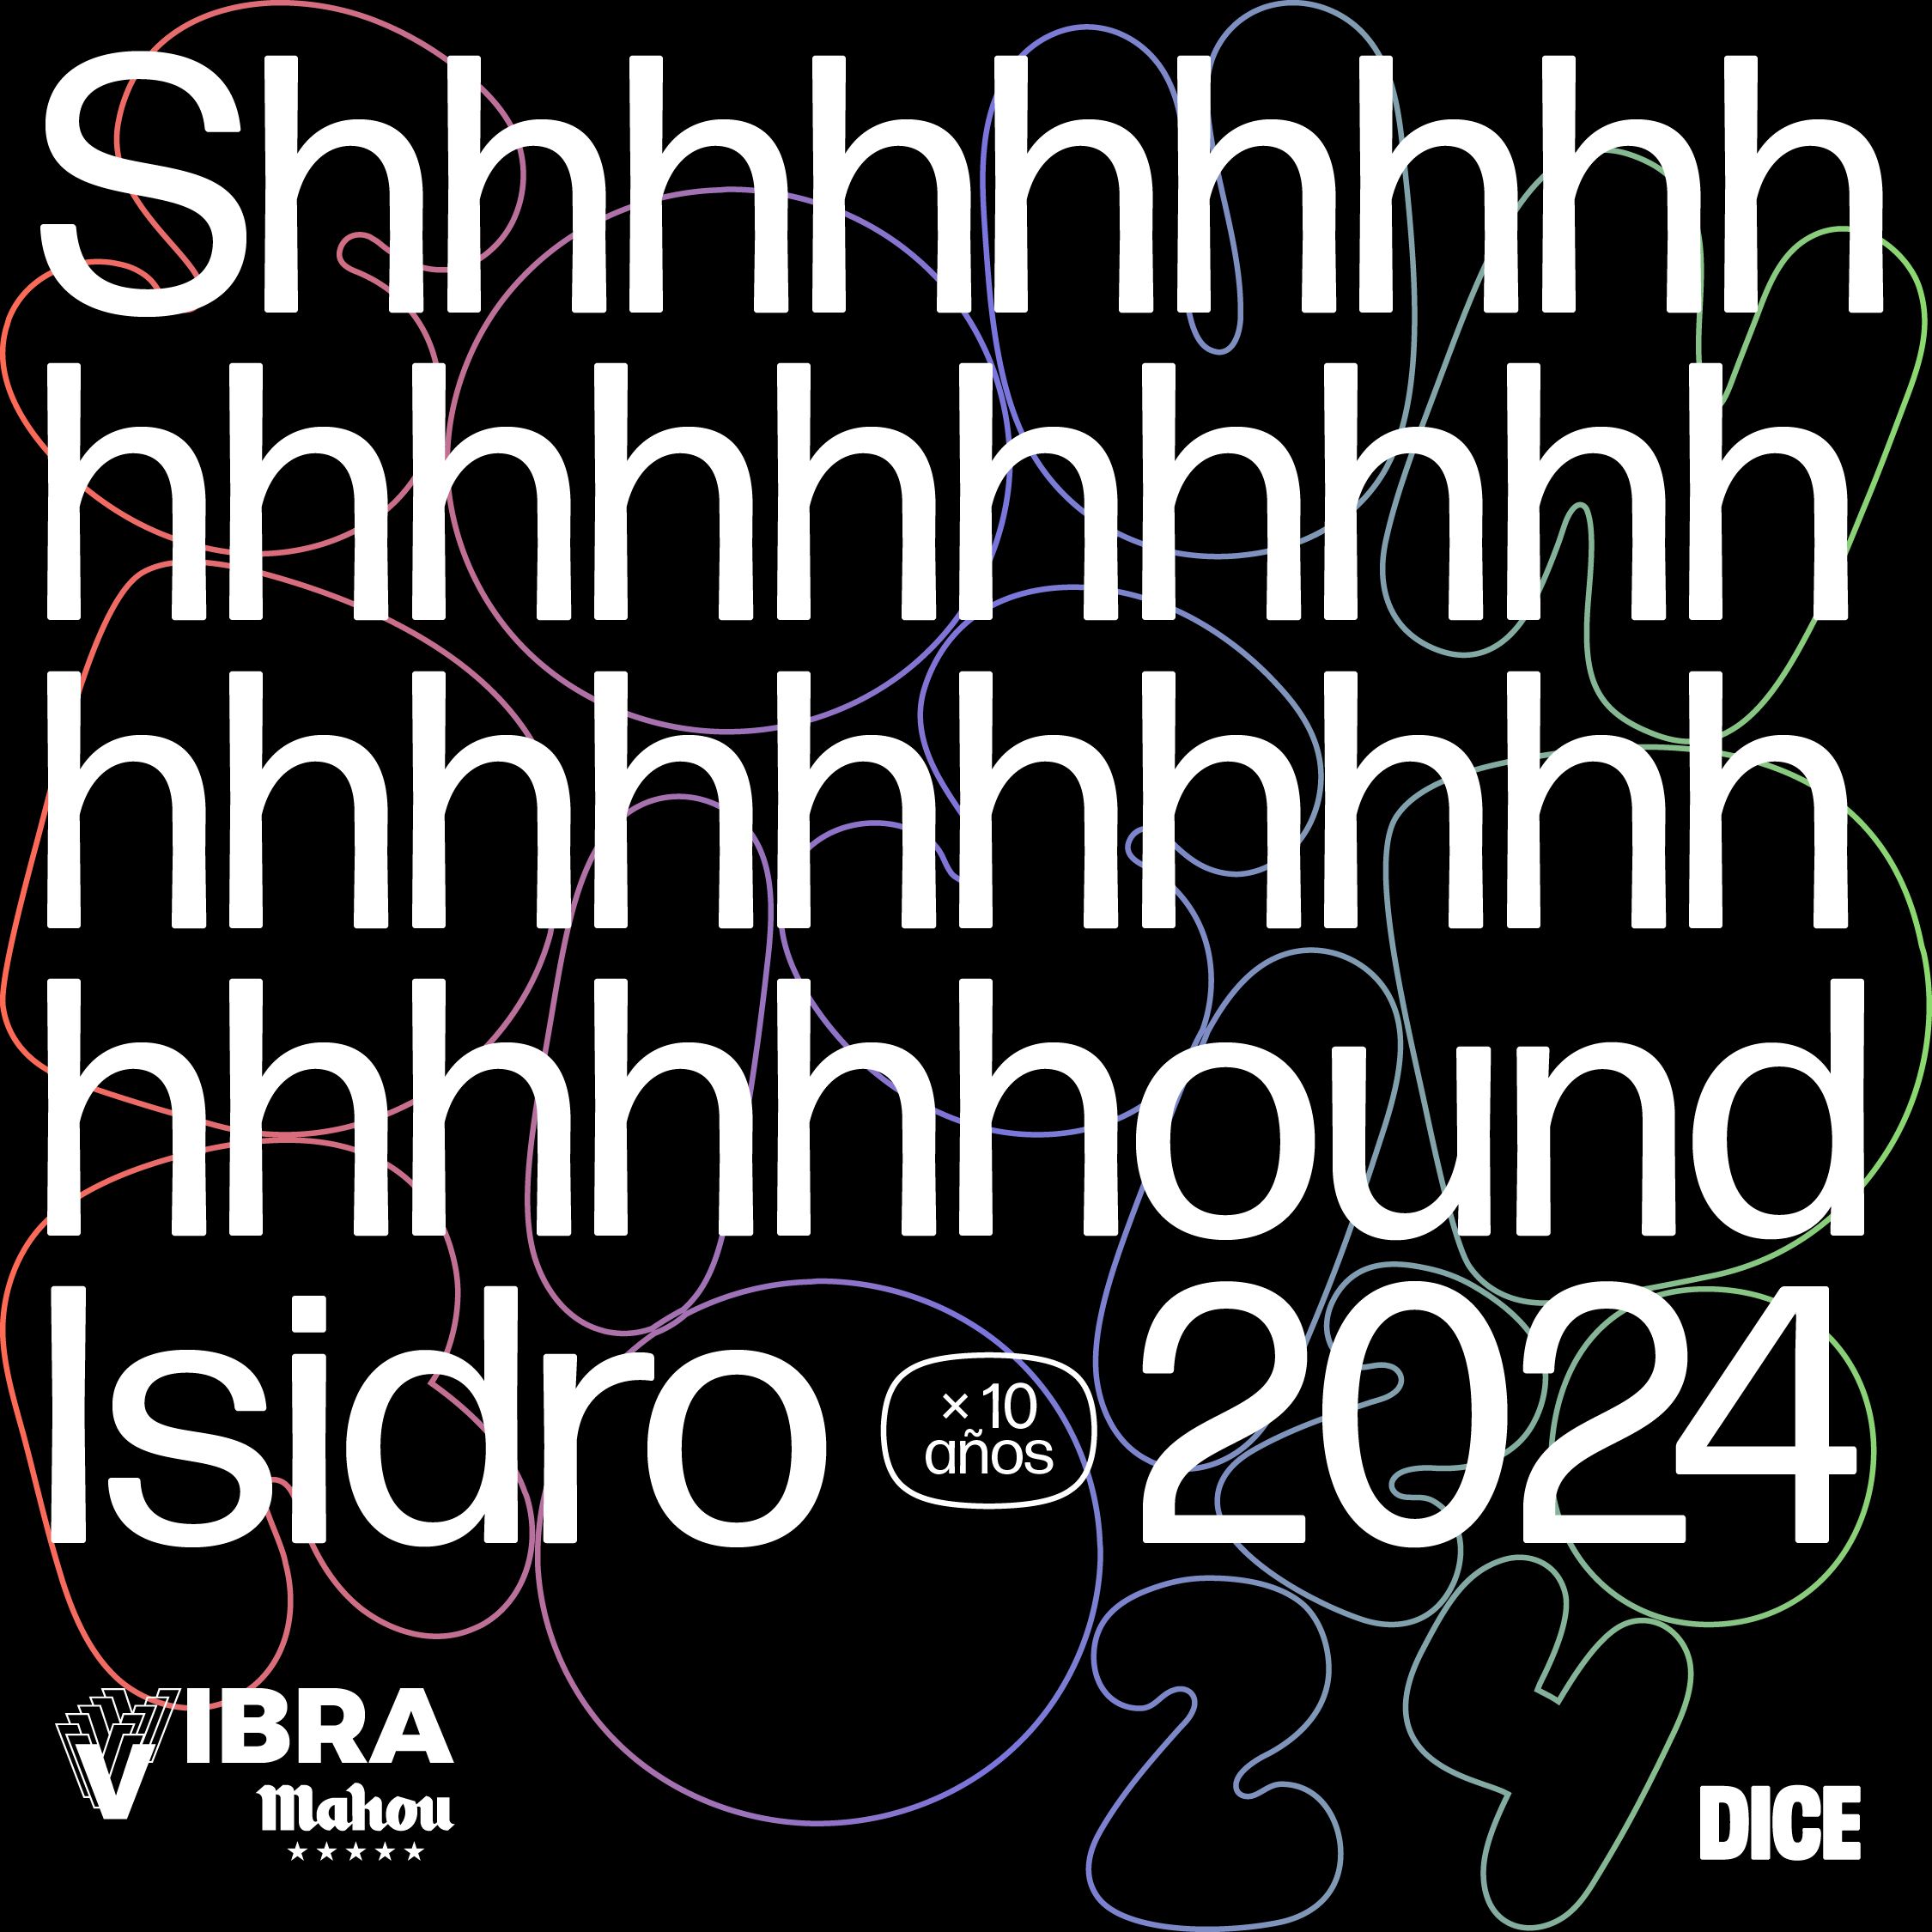 Aniversario Sound Isidro: SHHHOUND ISIDRO